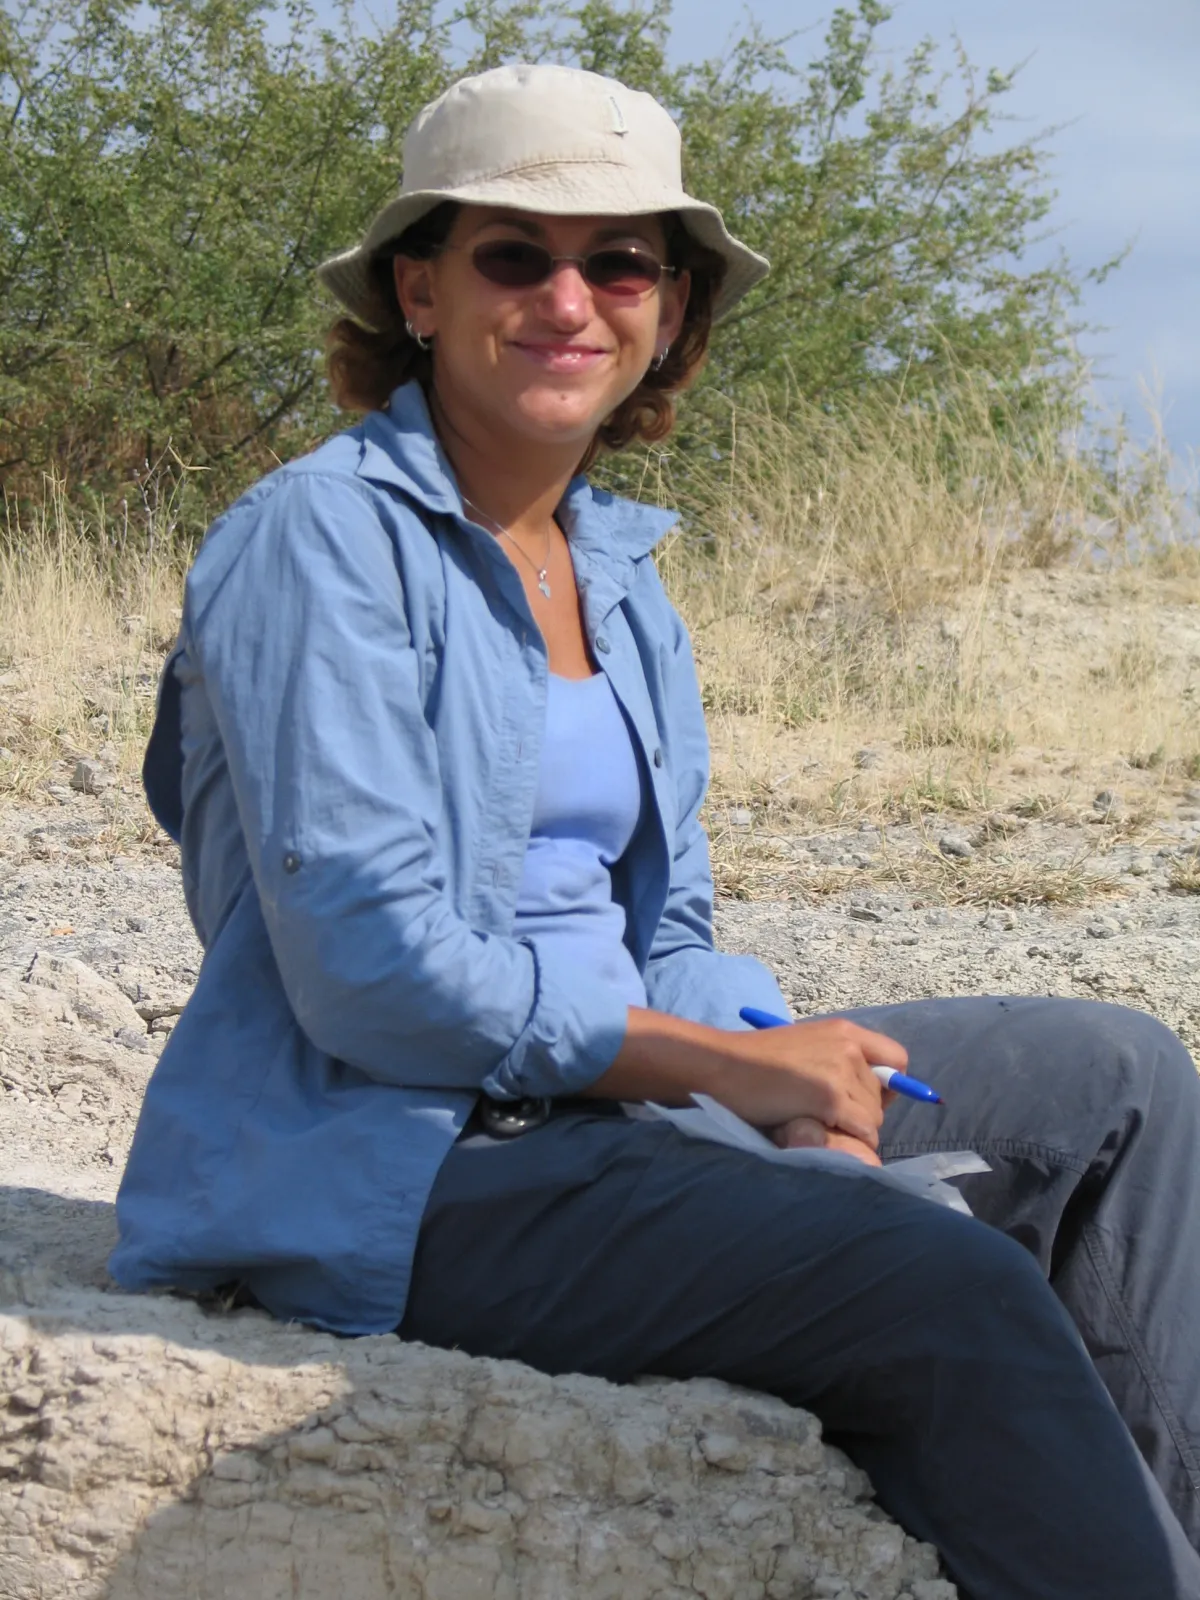 Briana Pobiner seated, Olorgesailie, Kenya